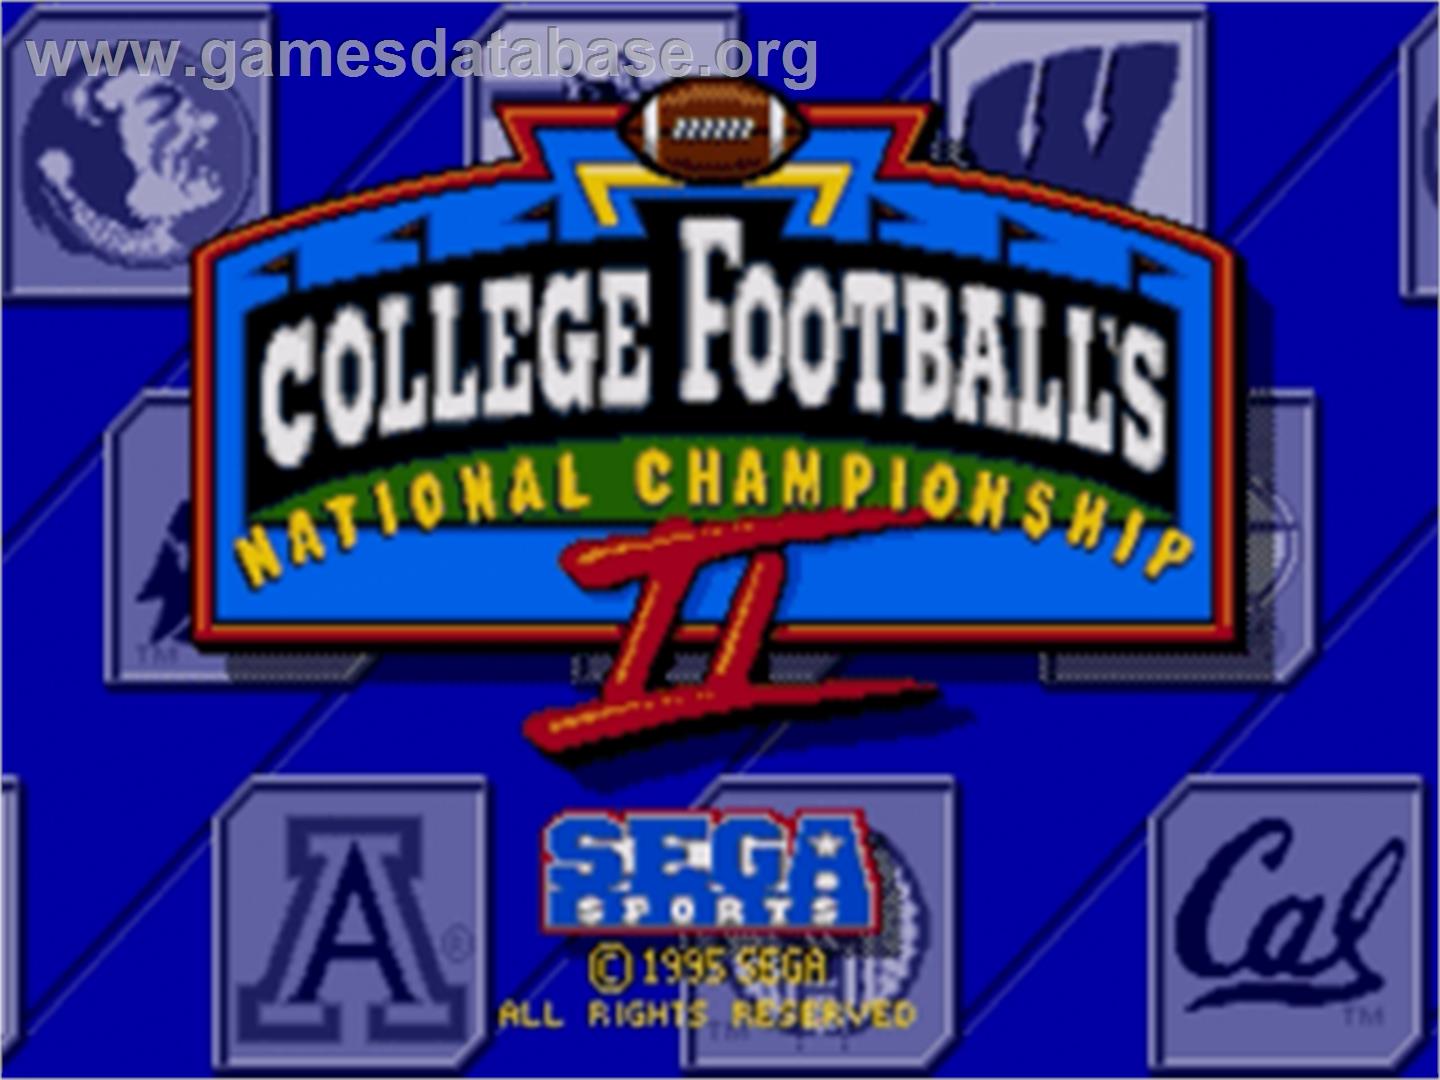 College Football's National Championship II - Sega Nomad - Artwork - Title Screen